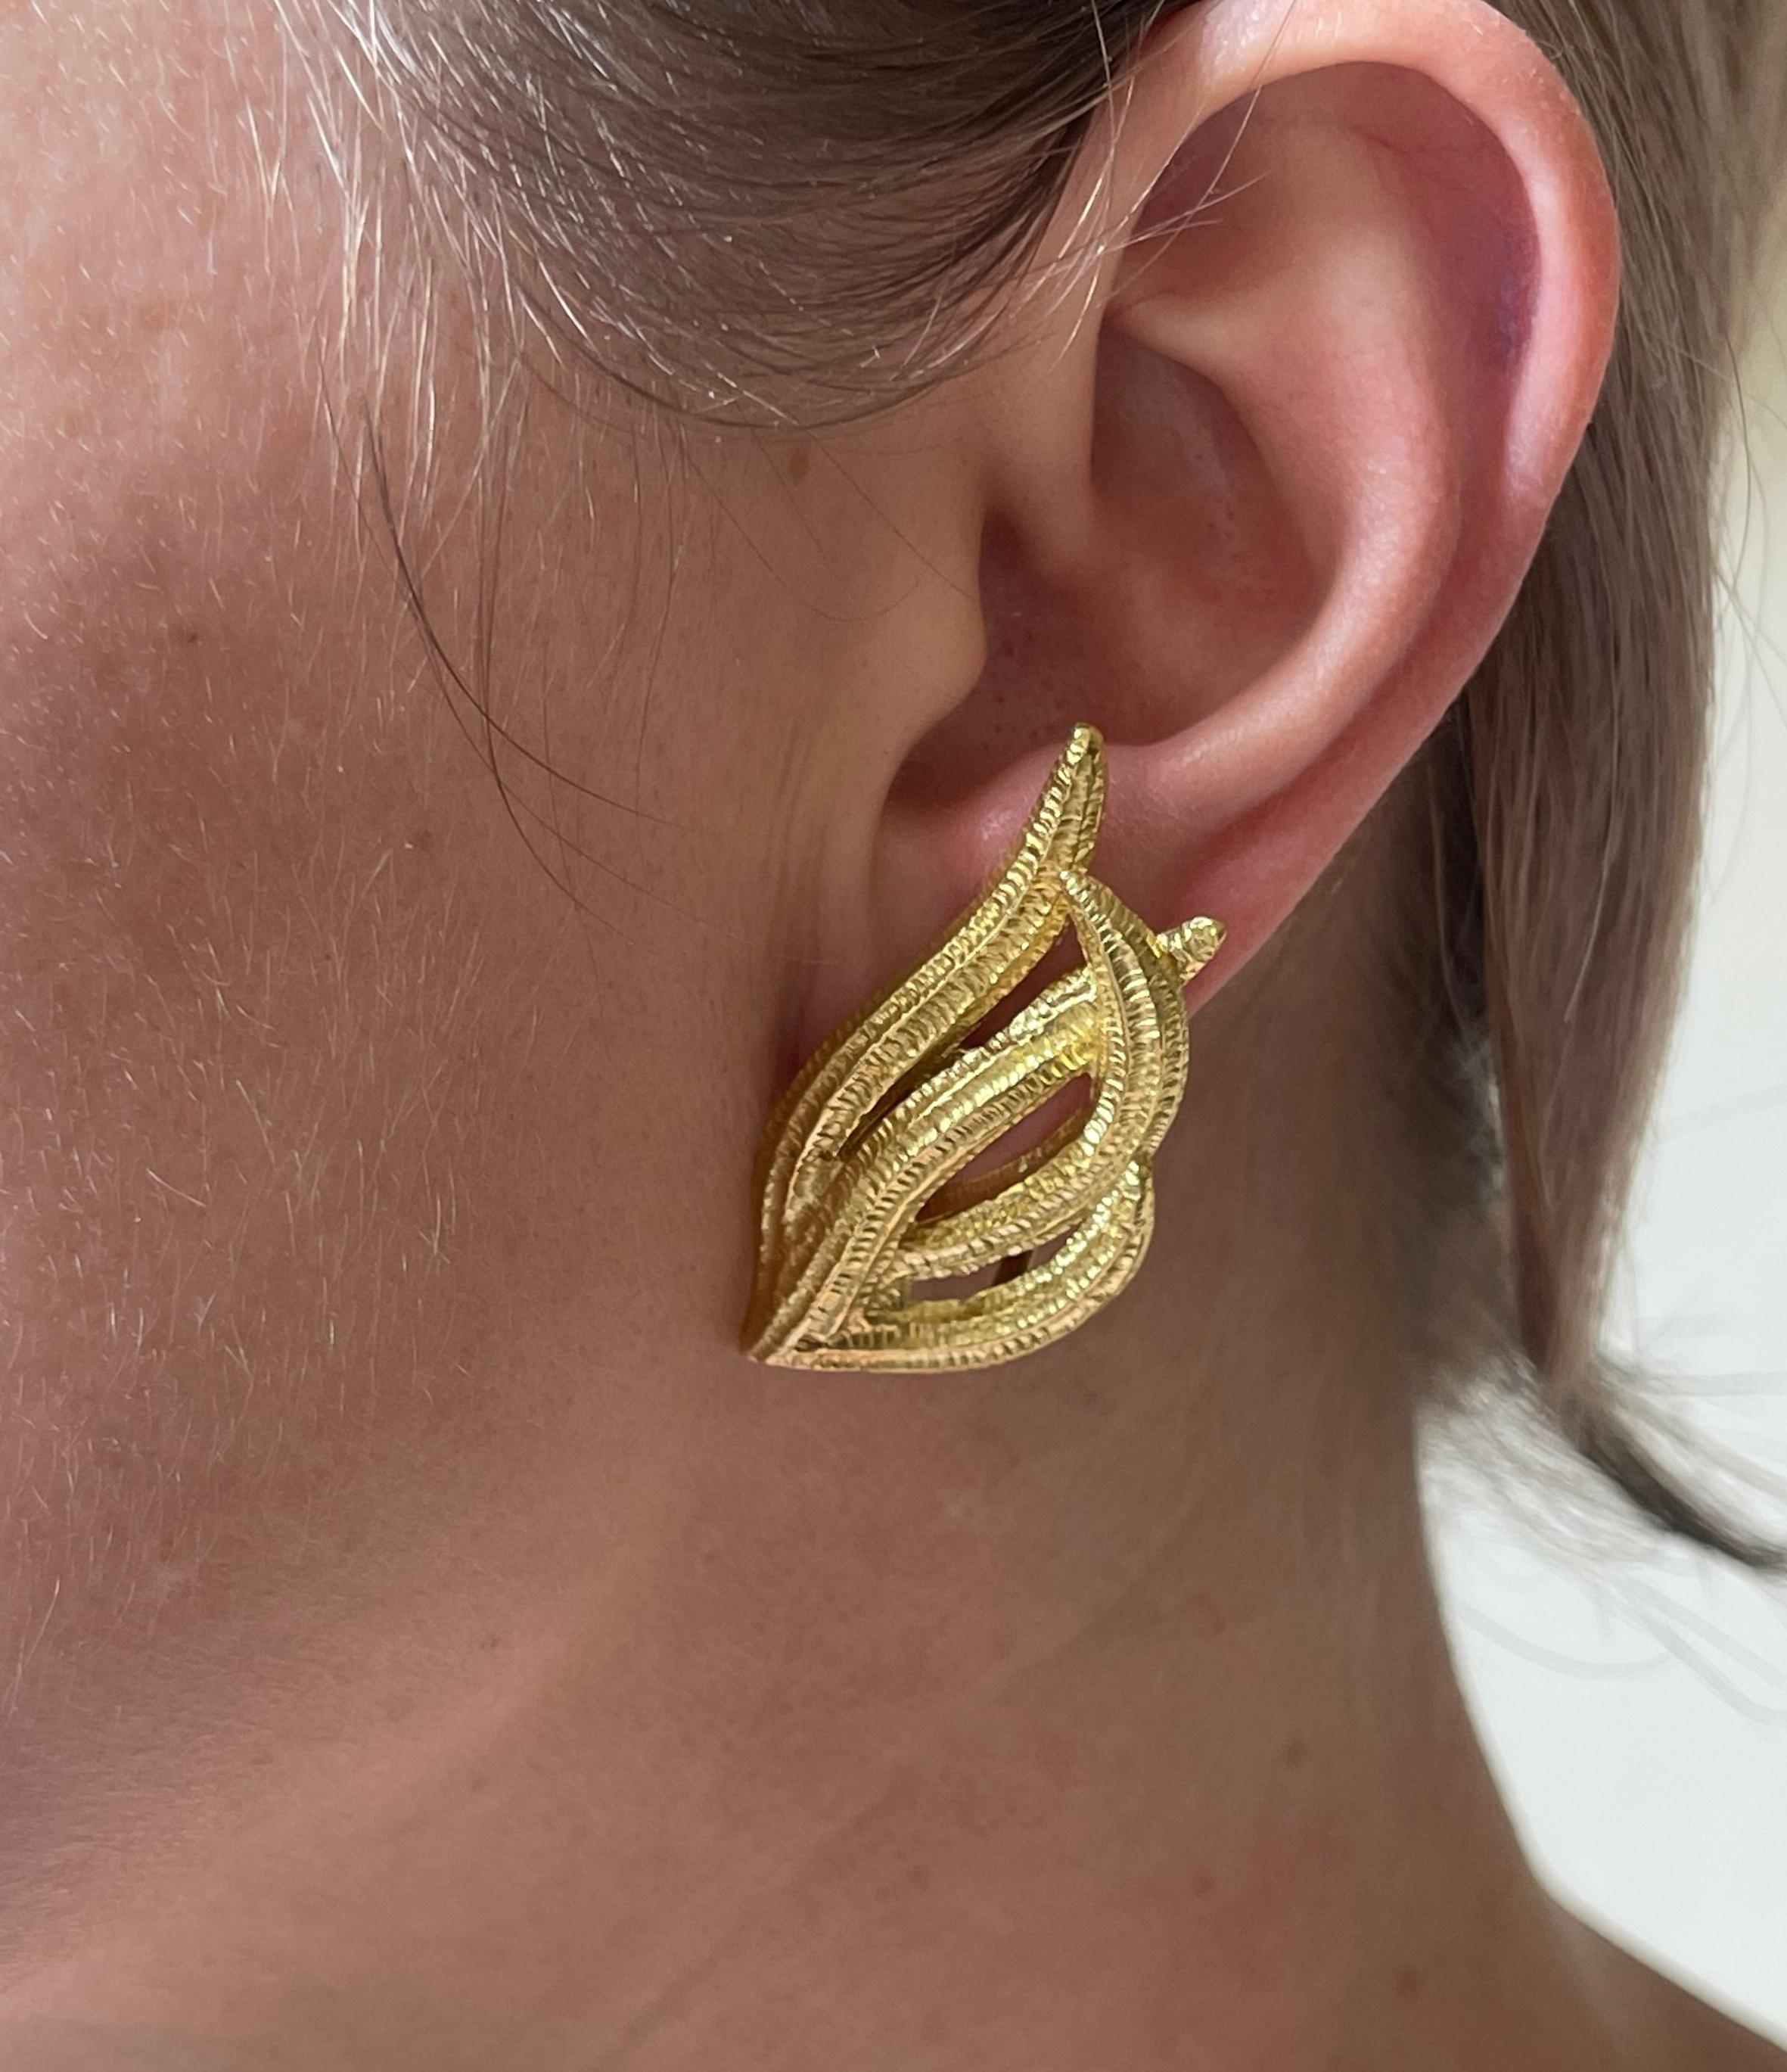 old gold earrings